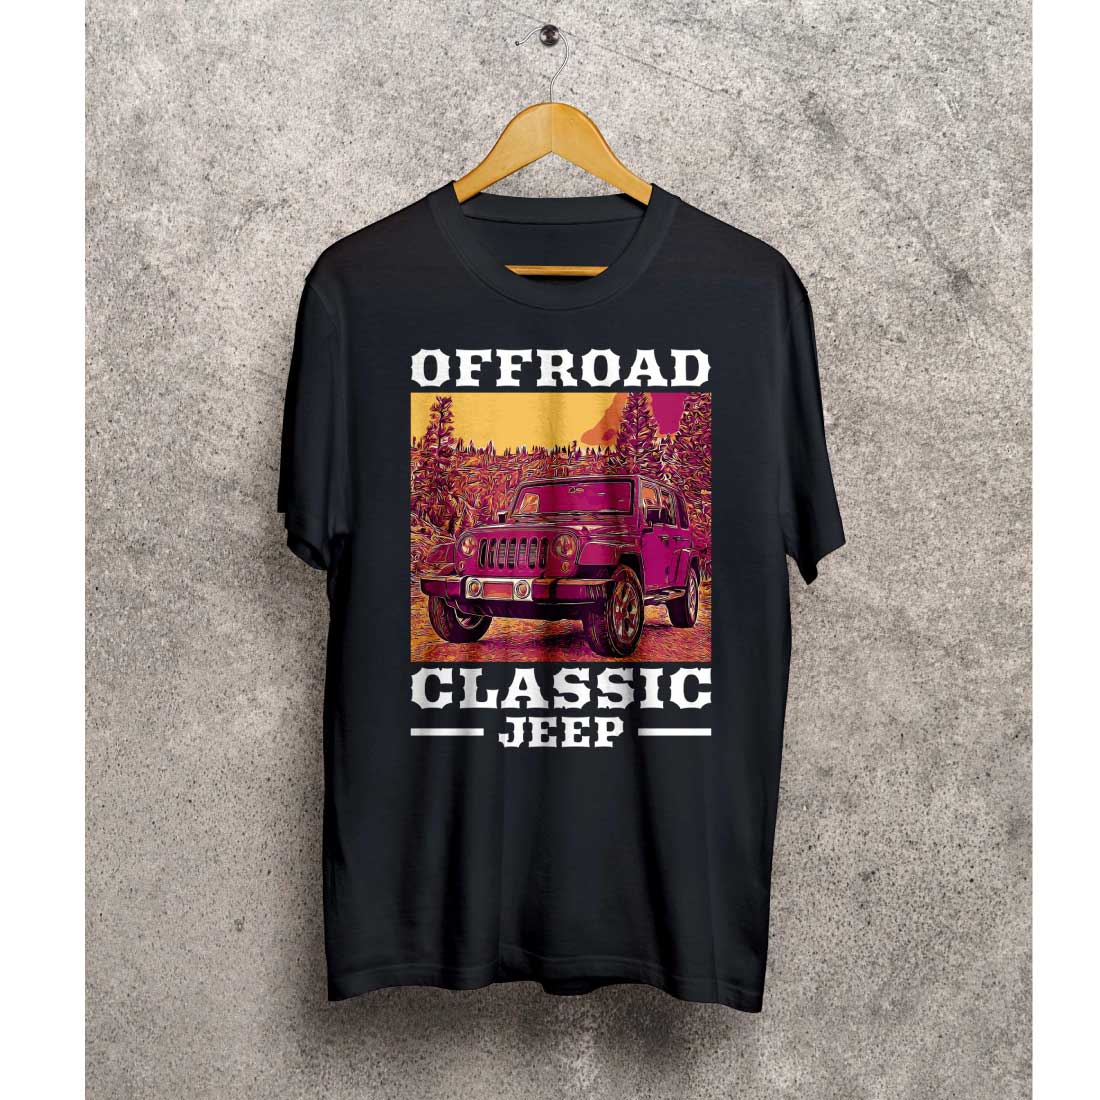 Off Road Classic, Adventure Speedy Car T-shirt Design cover image.